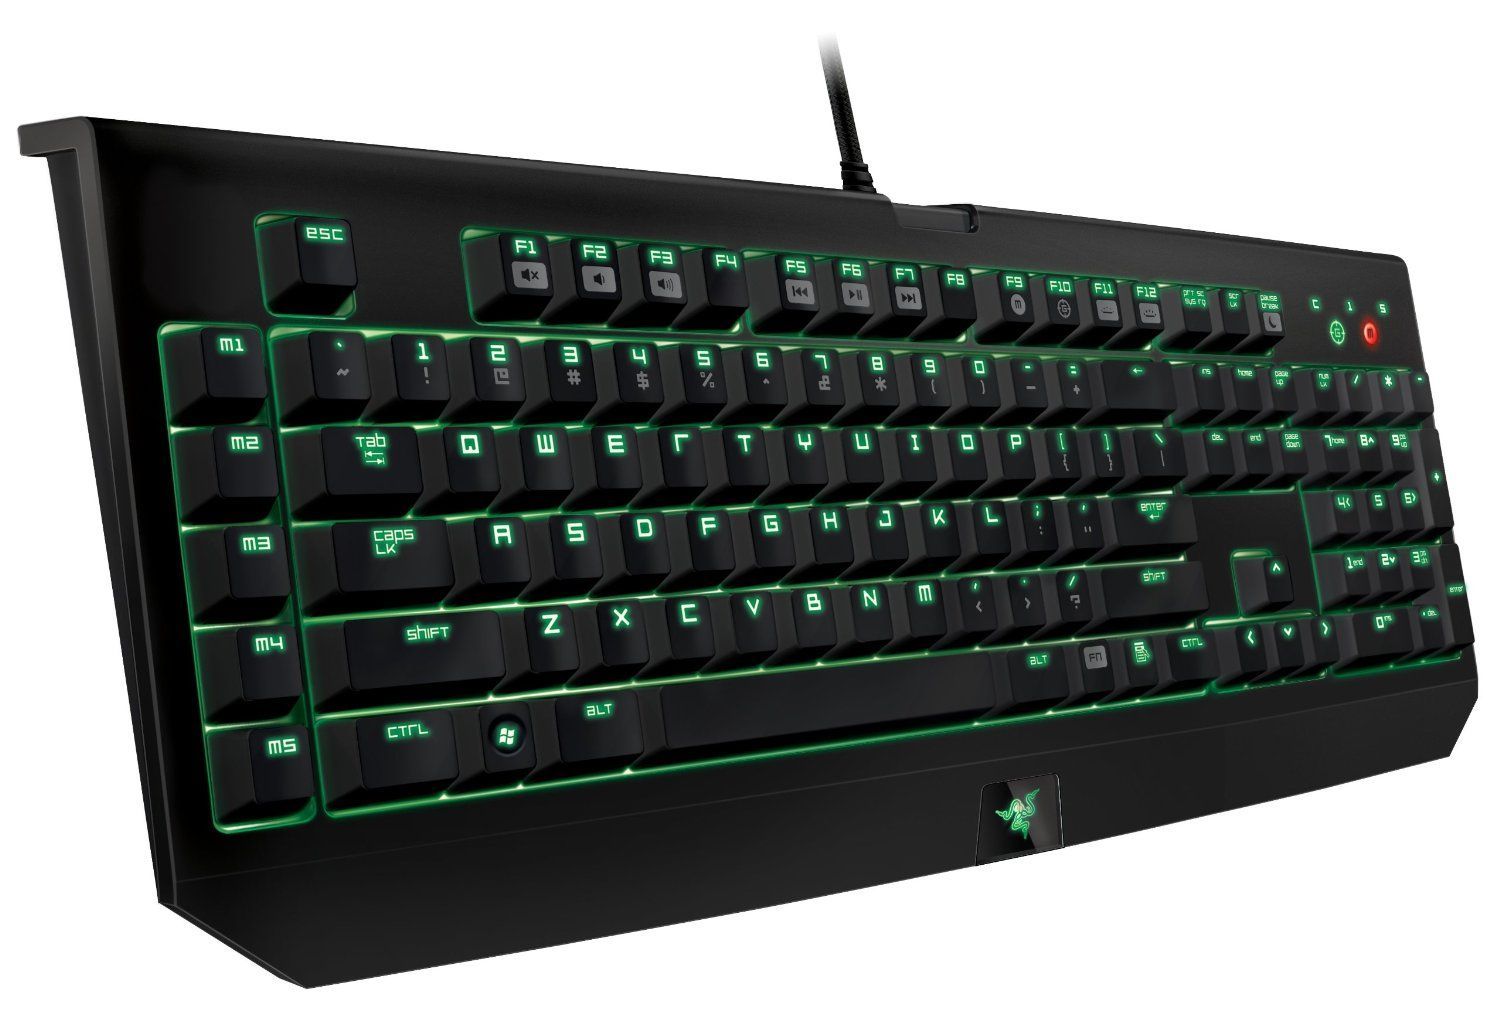 Razer Blackwidow gaming keyboard